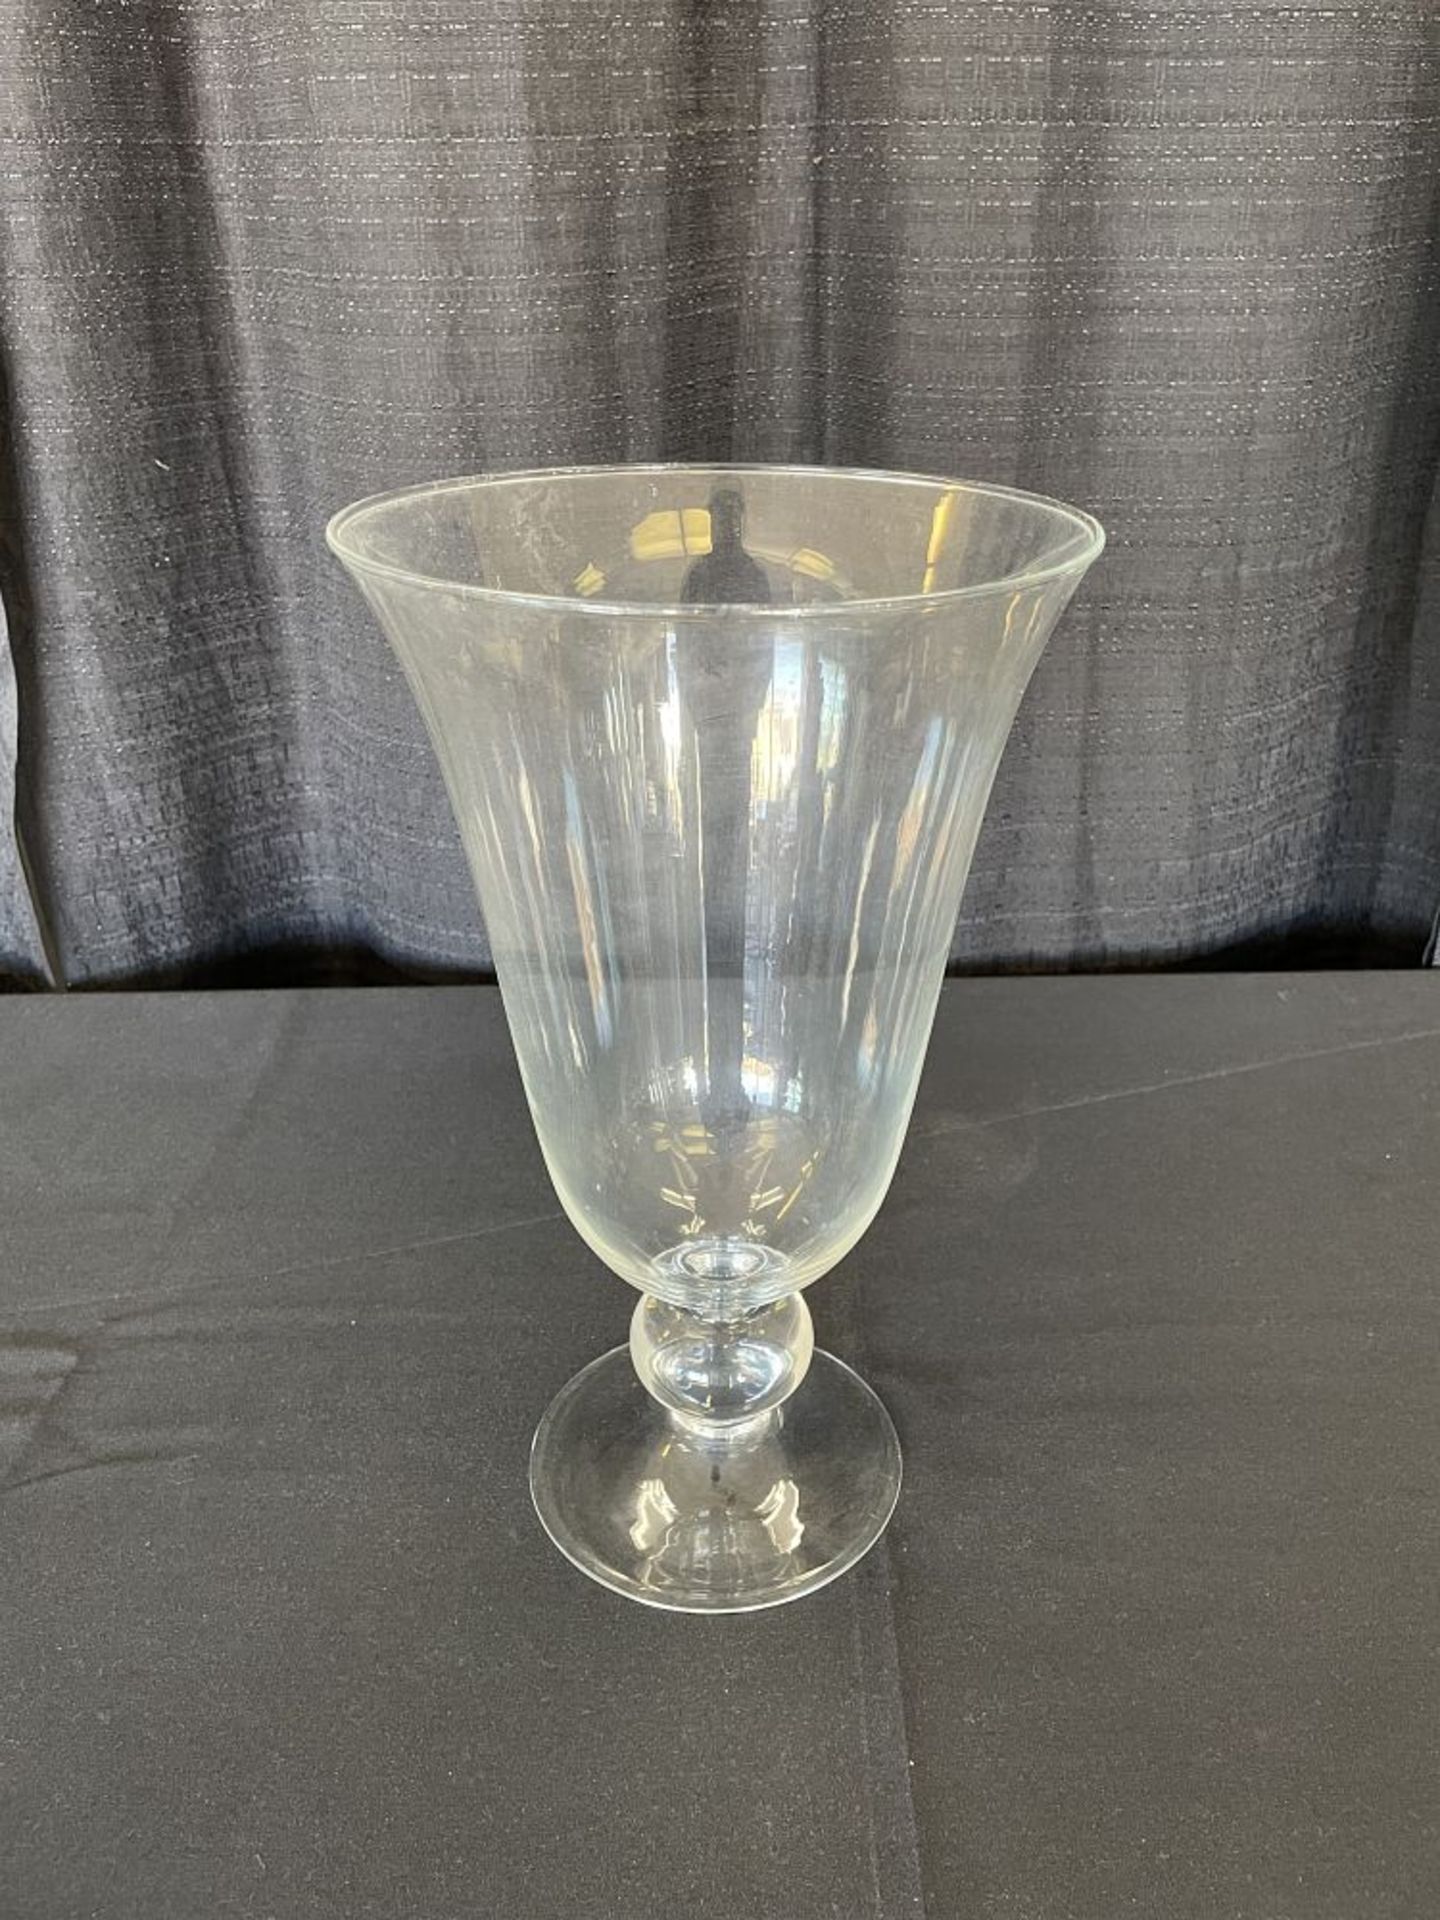 13" Fluted Glass Vase on Pedestal w/ ball